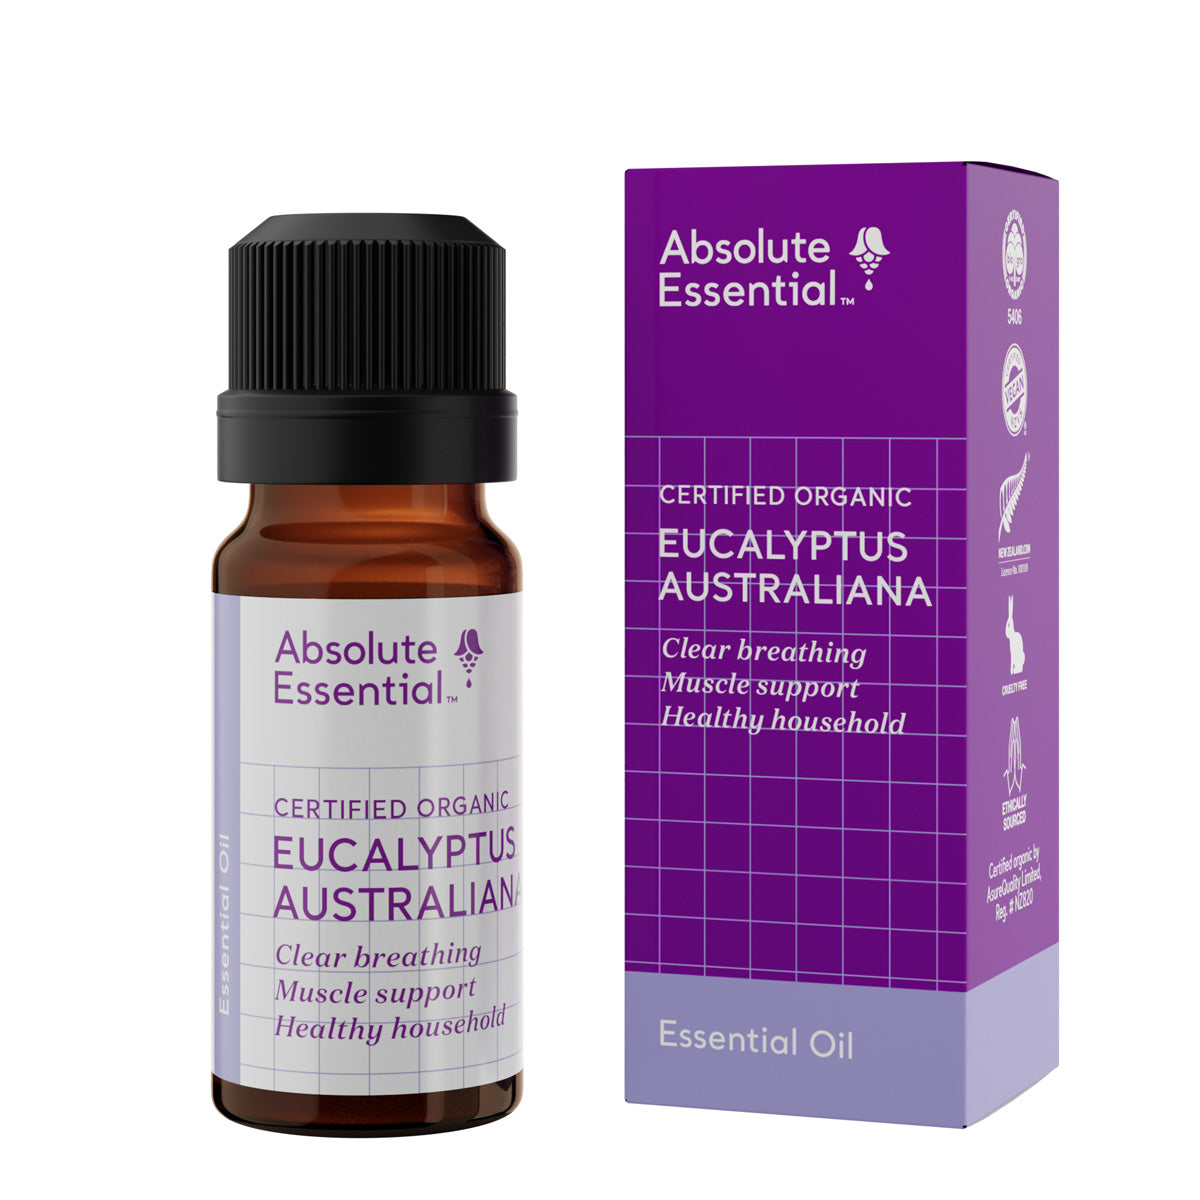 Absolute Essential Eucalyptus Australiana